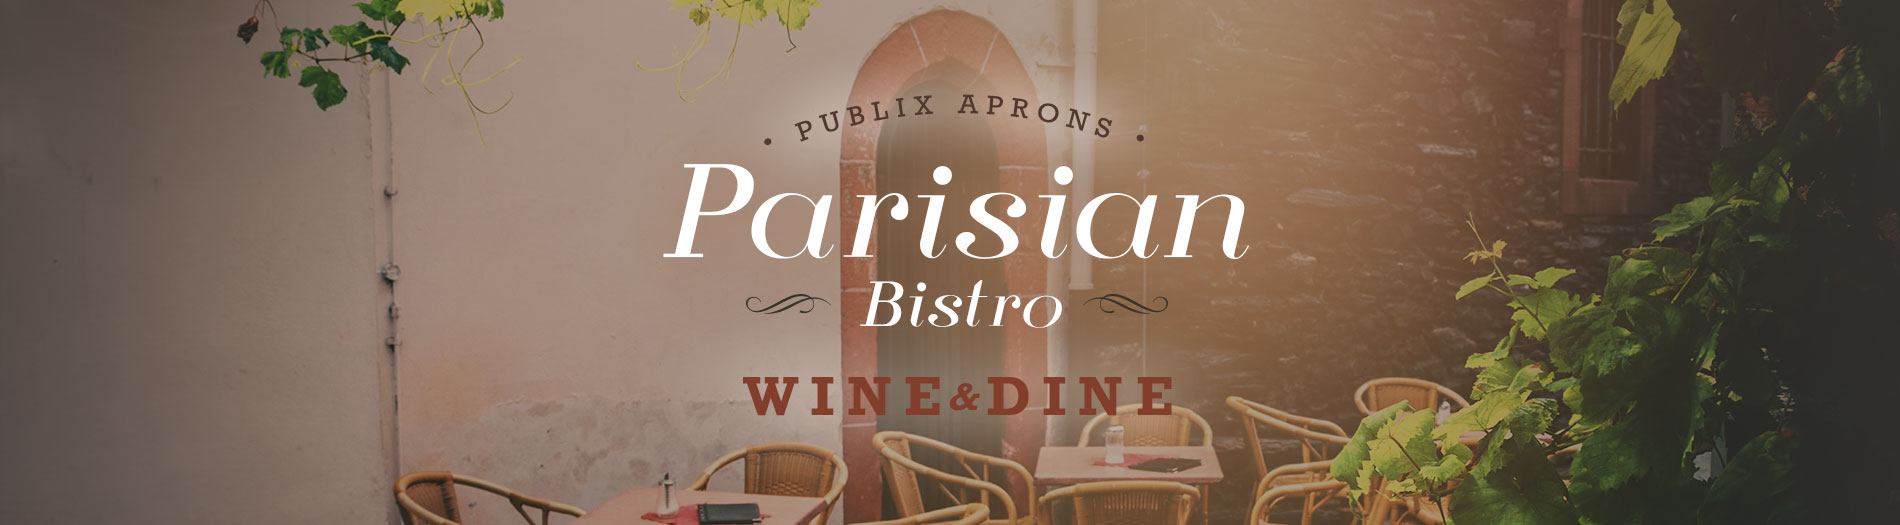 Parisian Bistro Wine And Dine